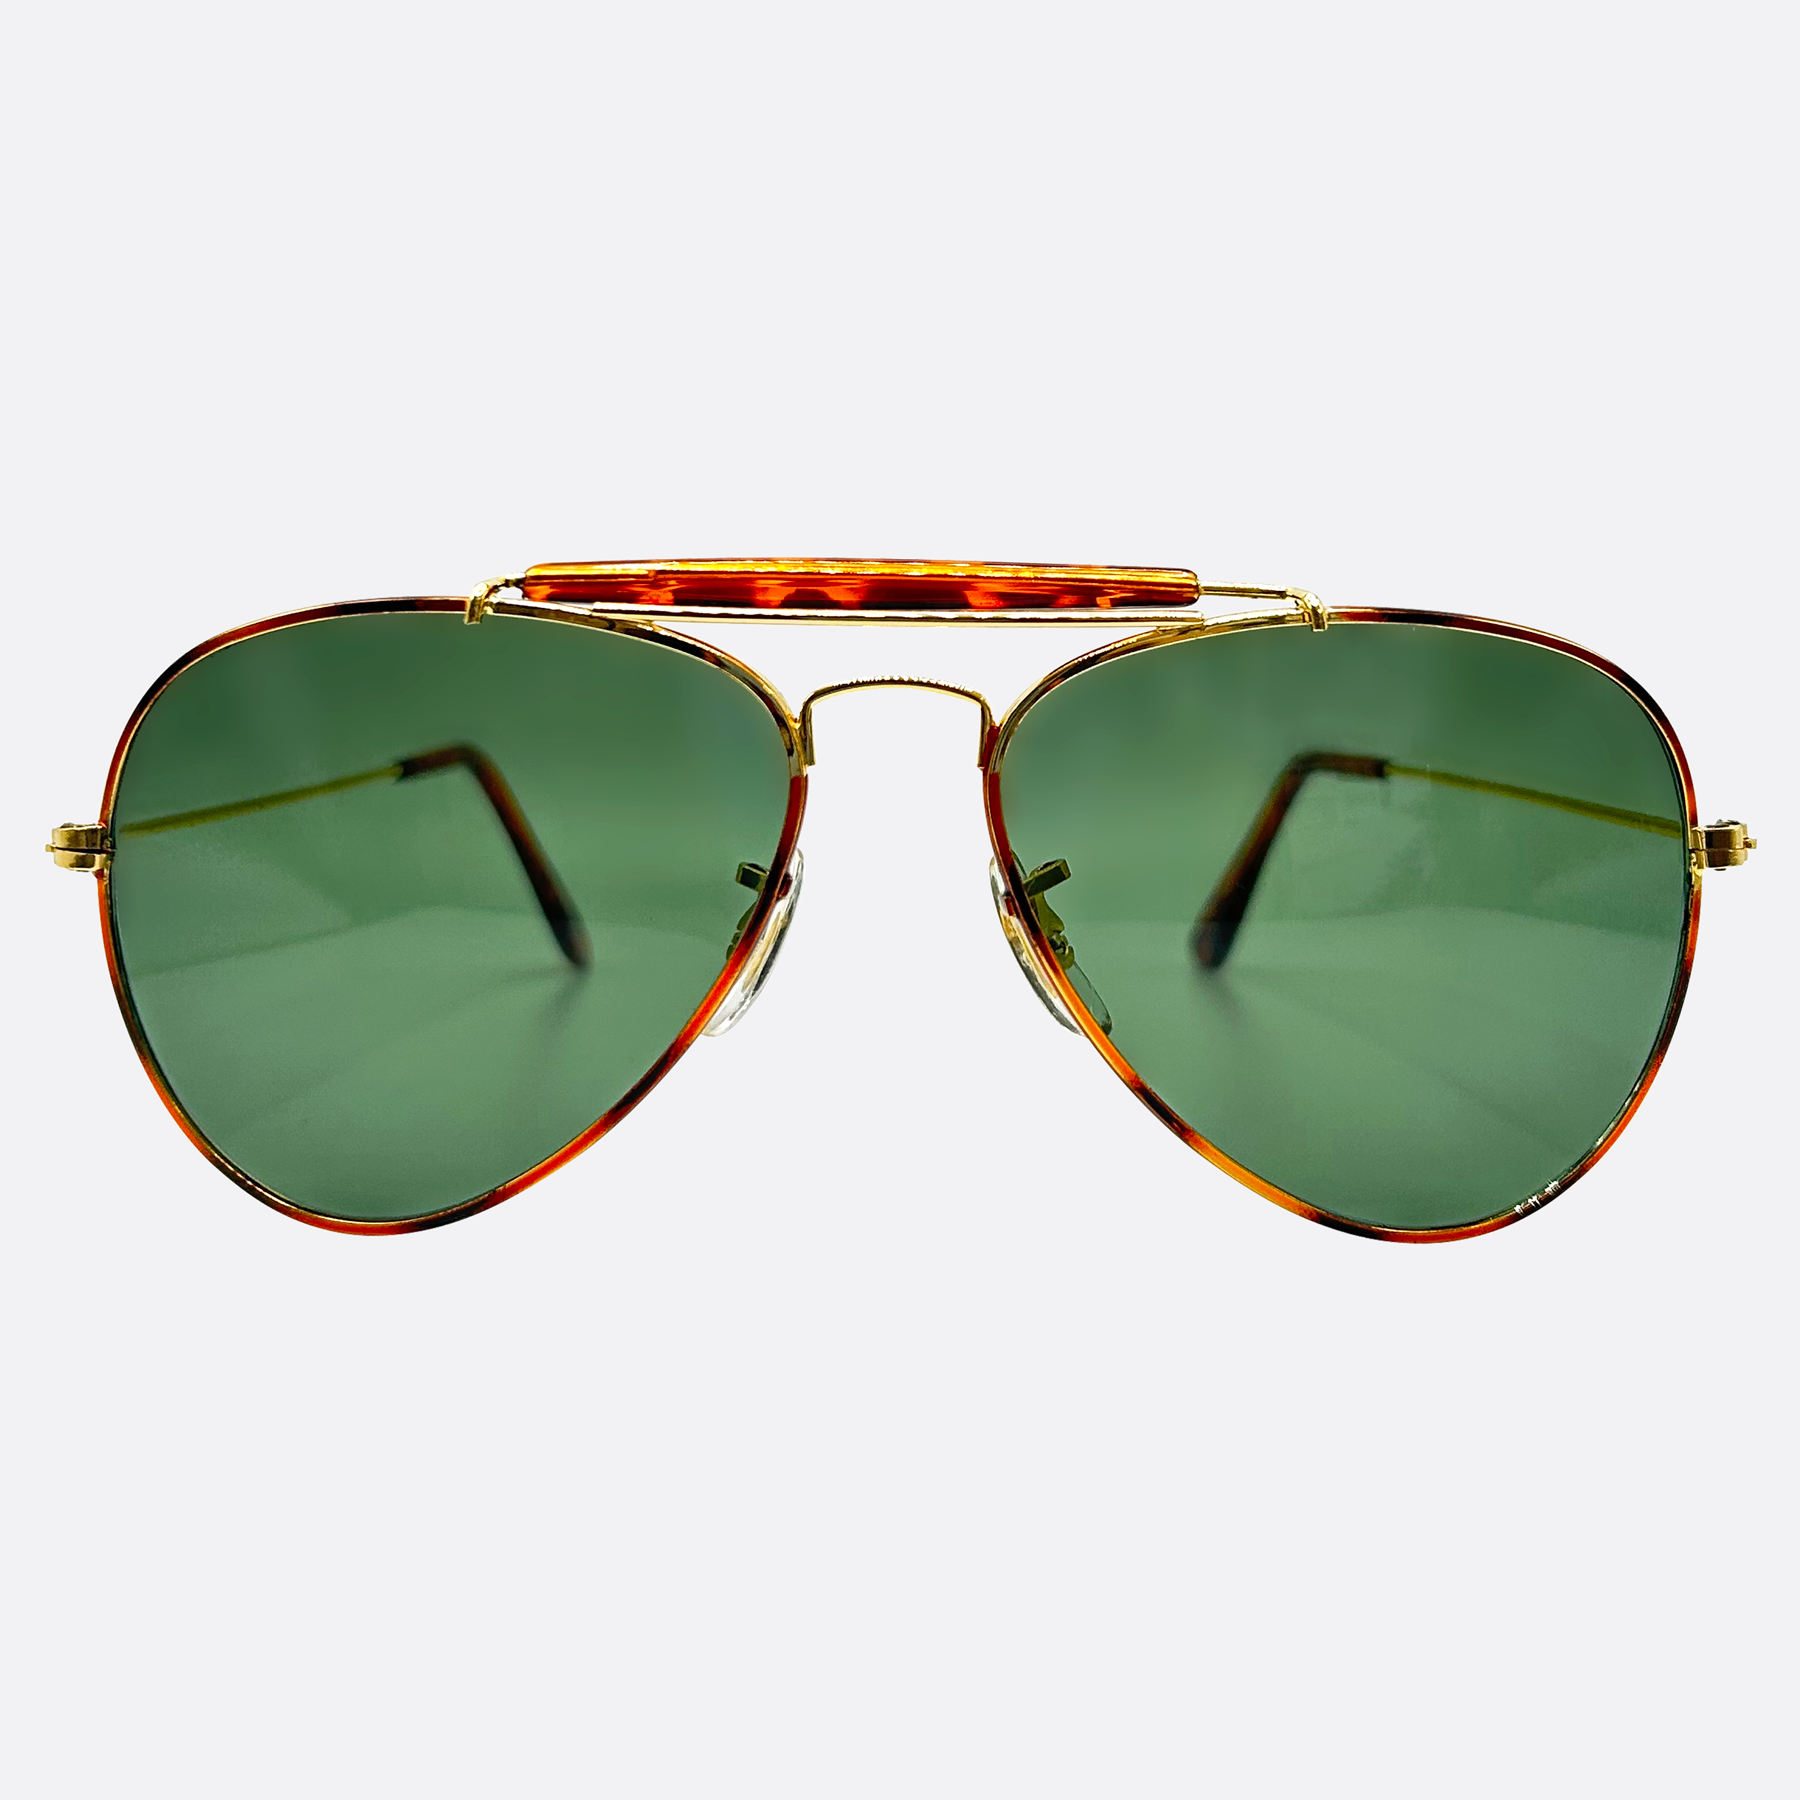 Eymen I Aviator Sunglasses Non-Polarized Womens Mens Trendy Retro Vintage  70s Sunglasses for Women Men